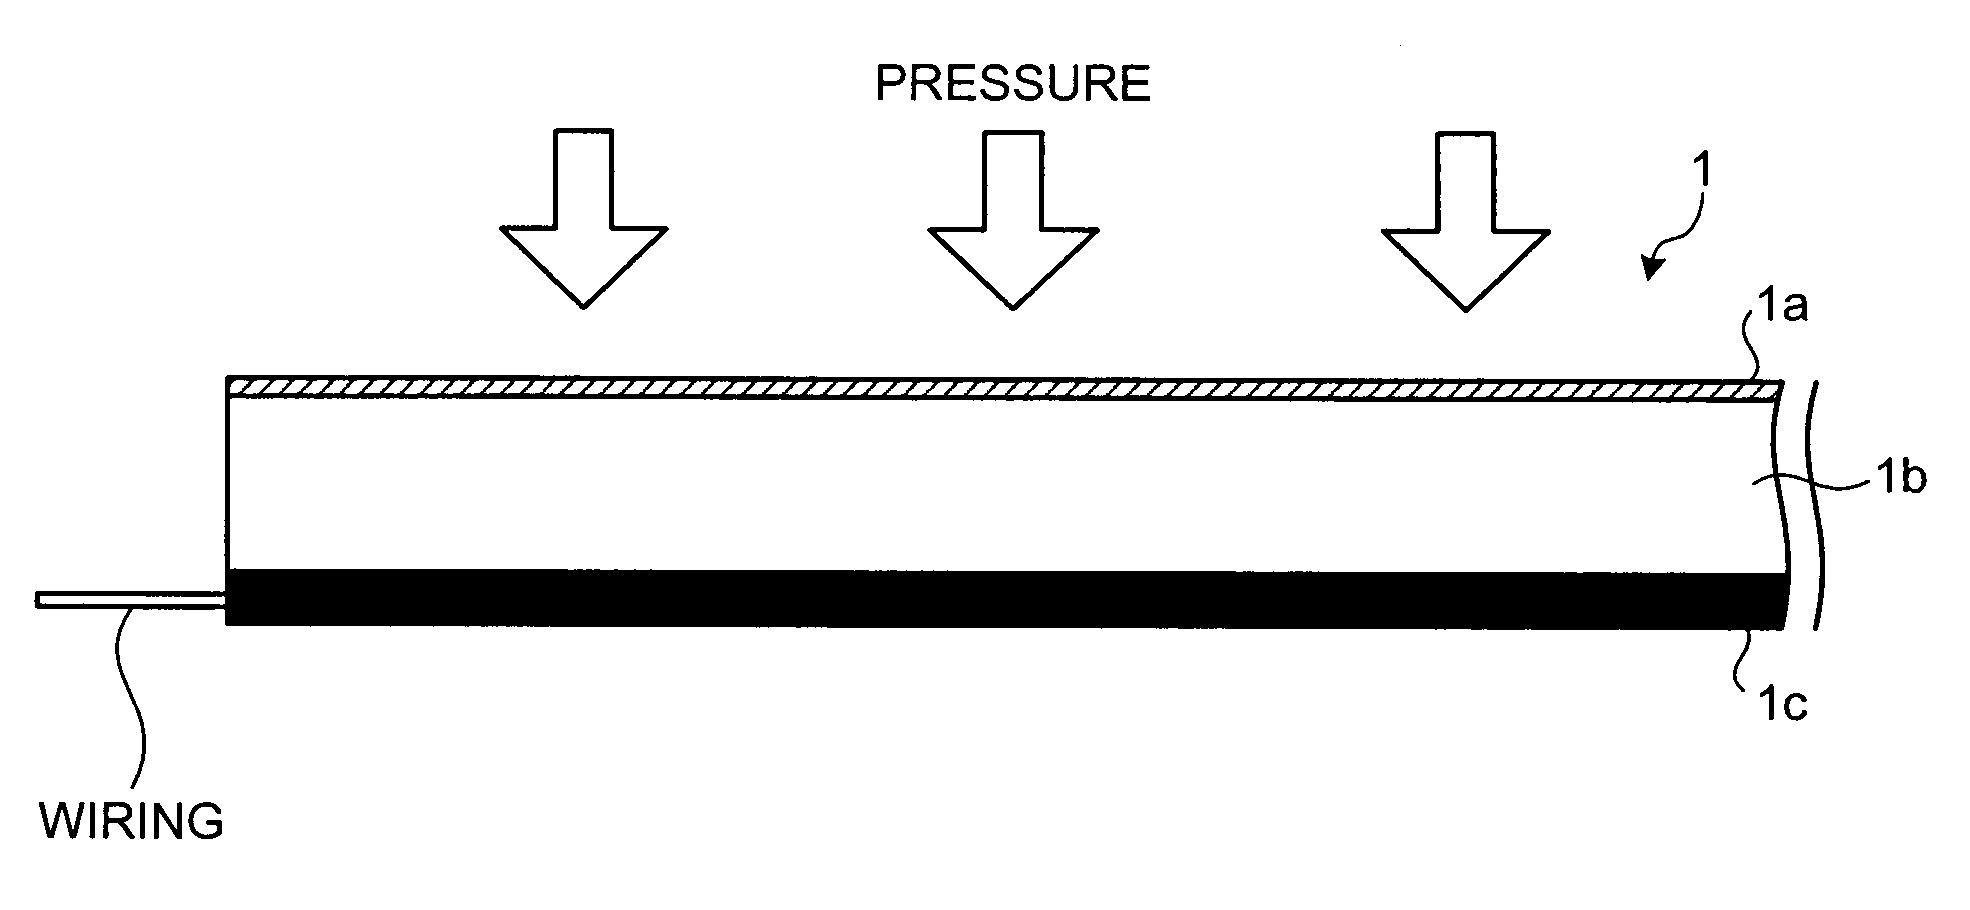 Pressure sensor and device for measuring pressure